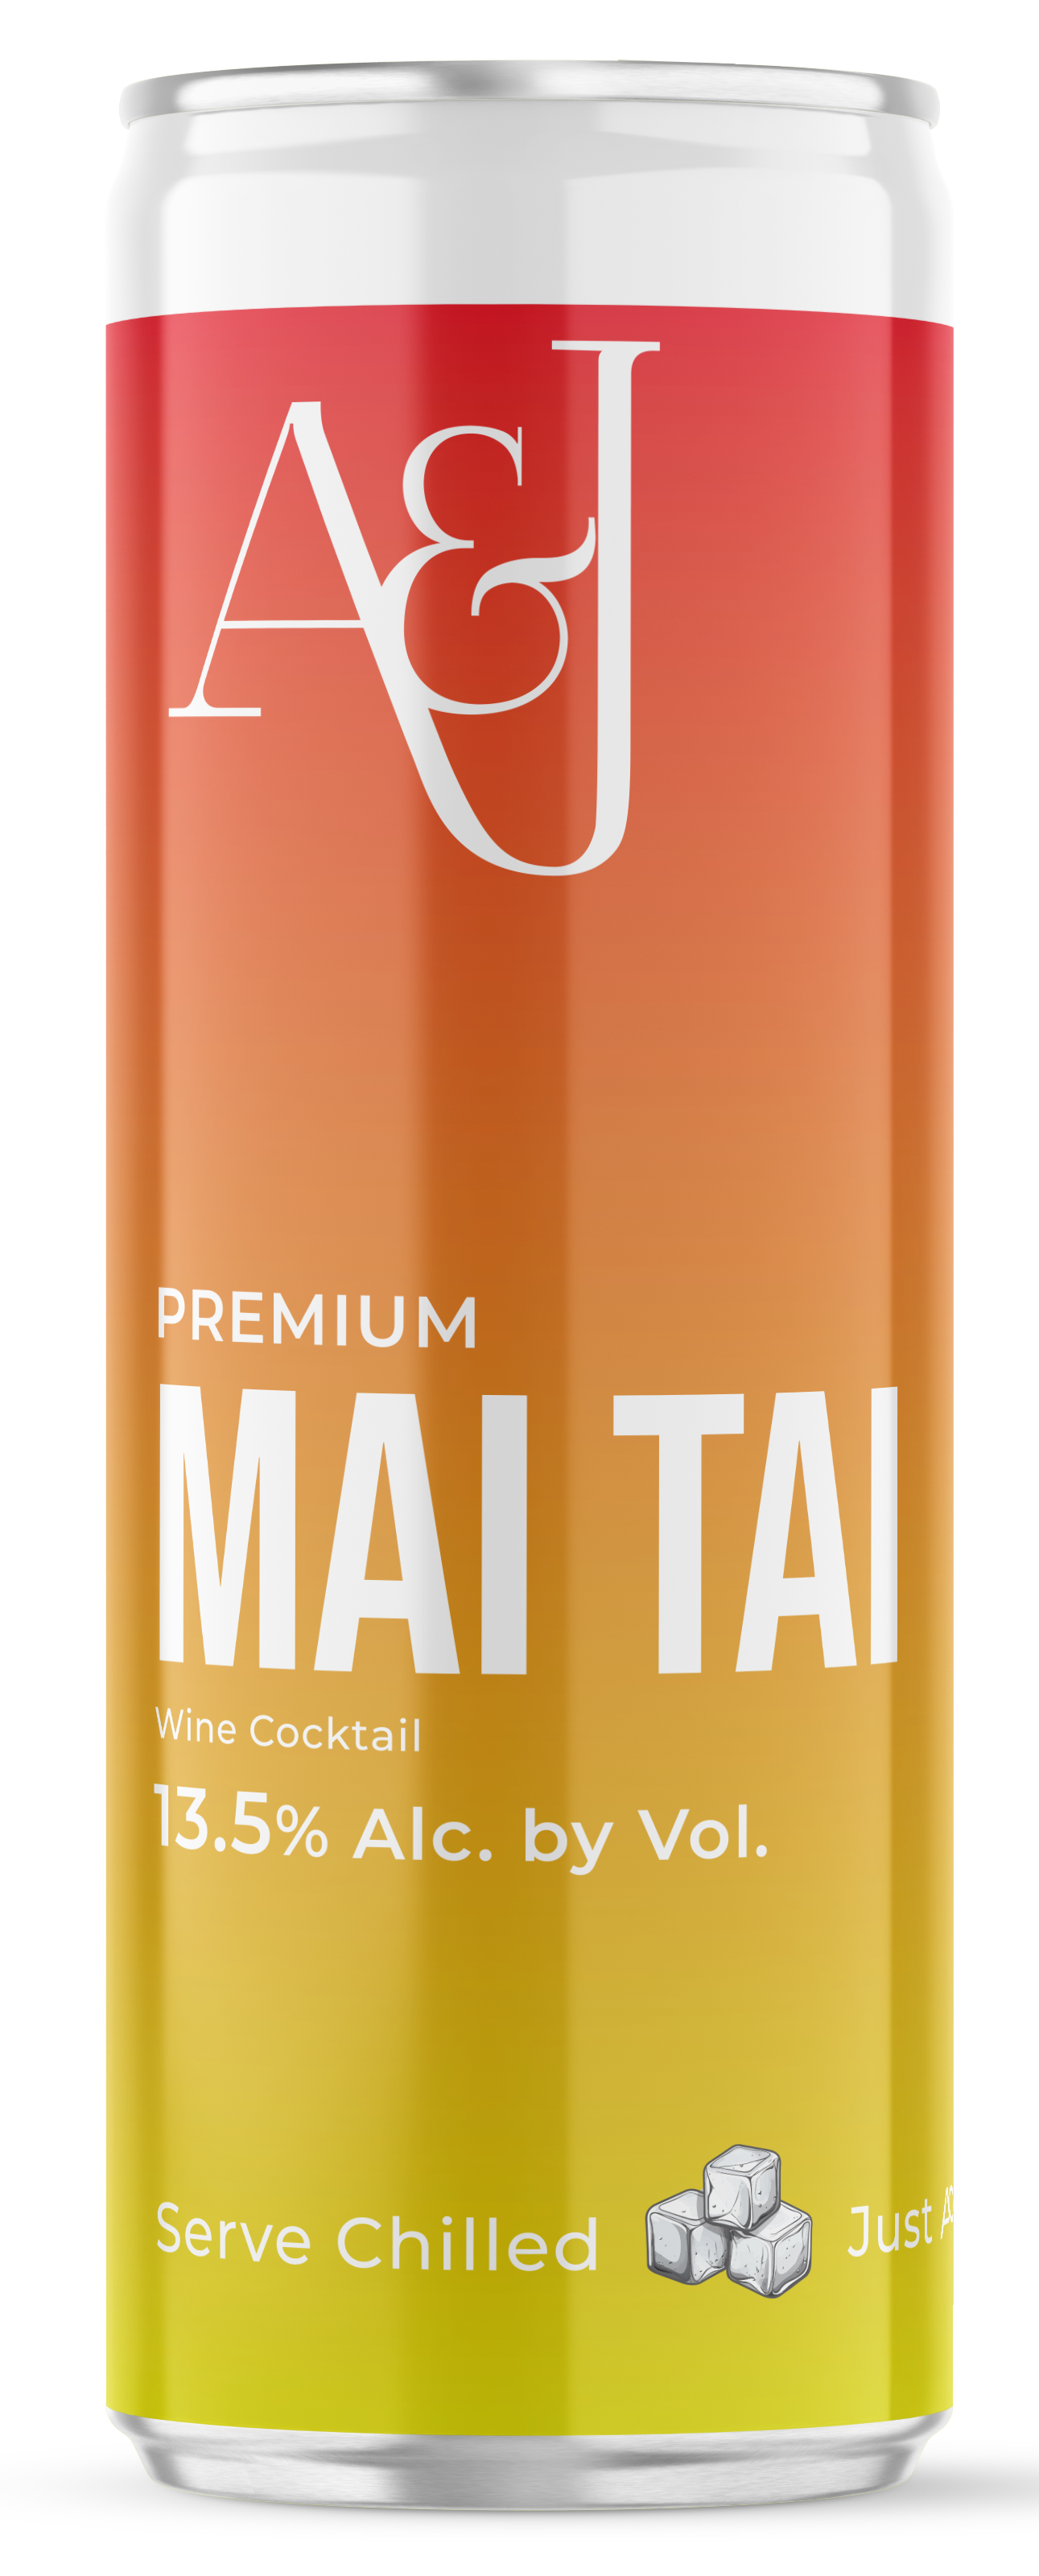 Product Image for MAI TAI WINE COCKTAIL